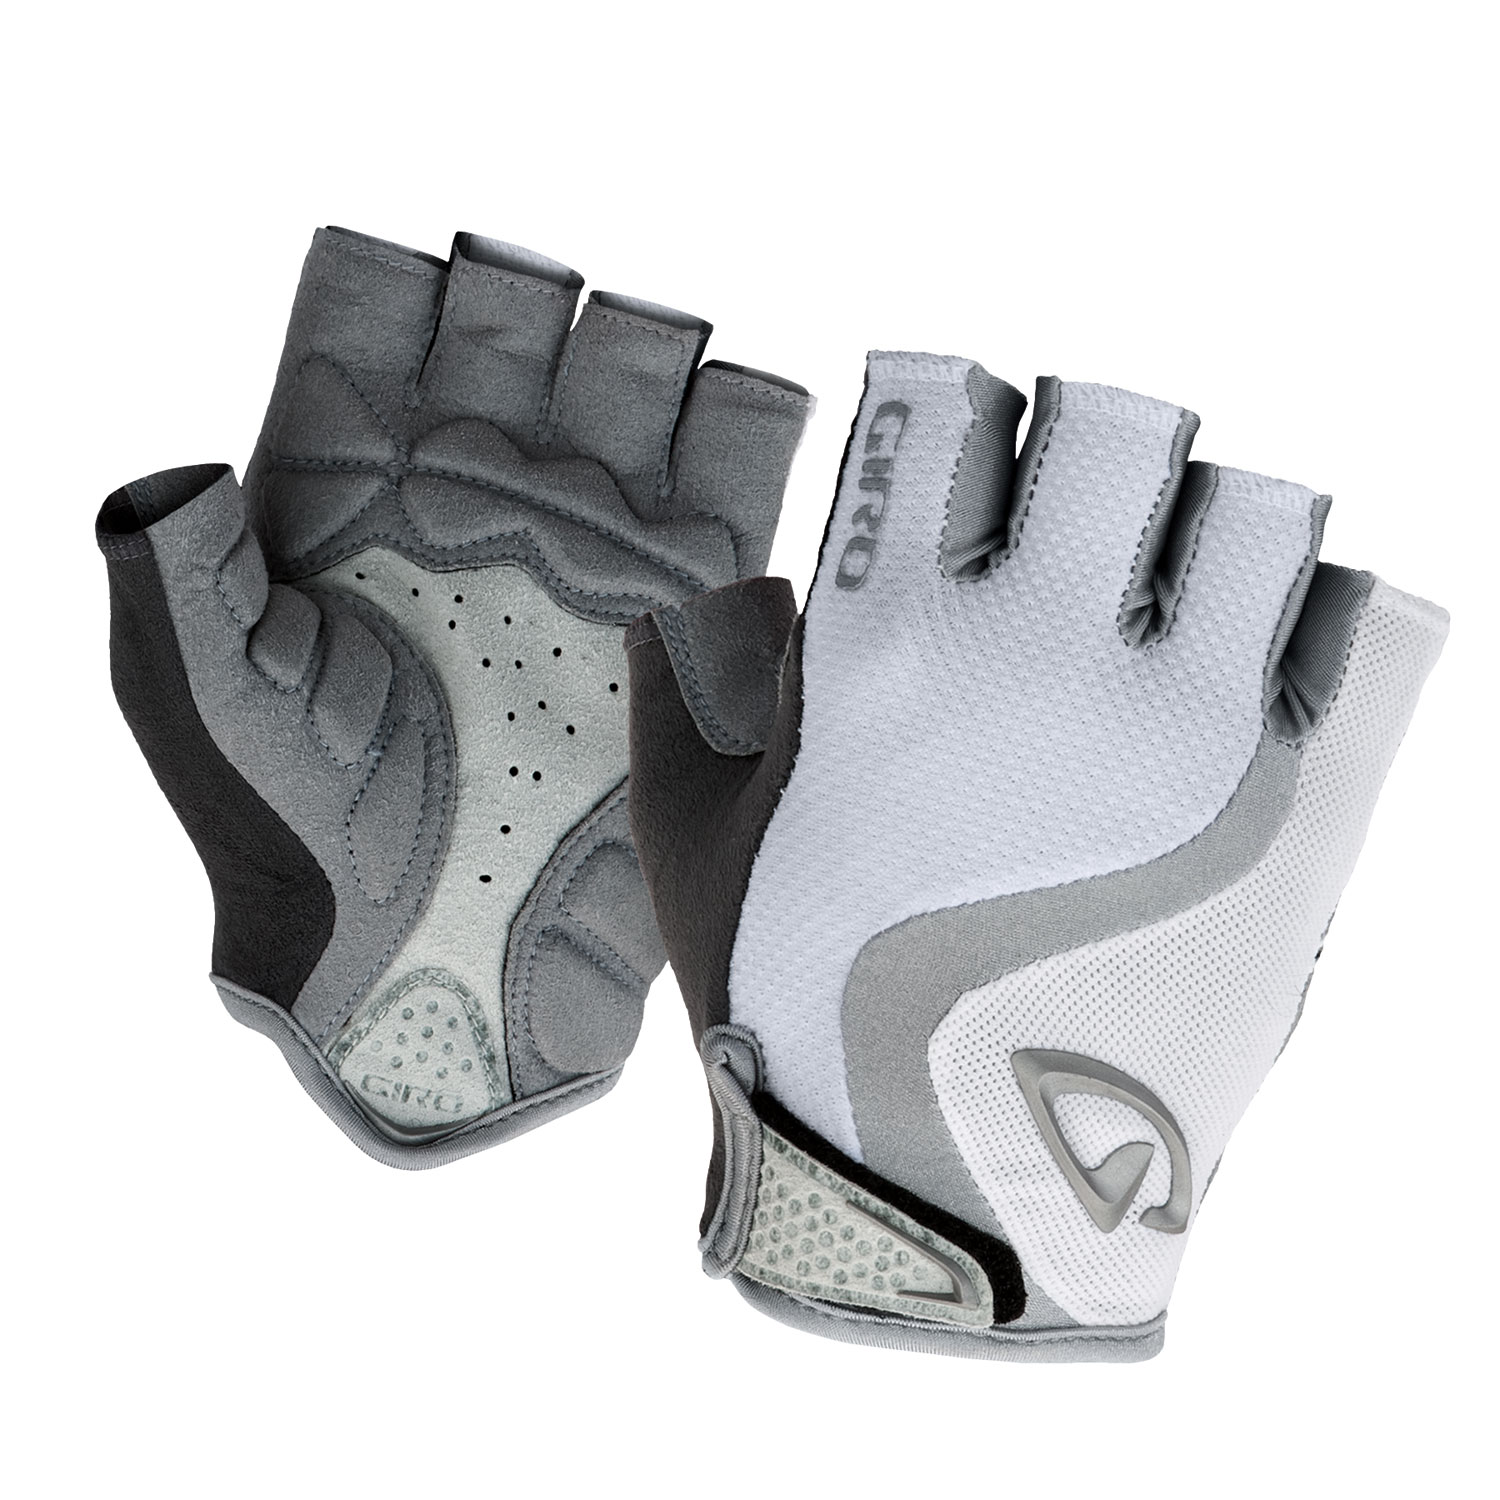 Giro Tessa Cycling Gloves Whitesilver for Cycling Gloves